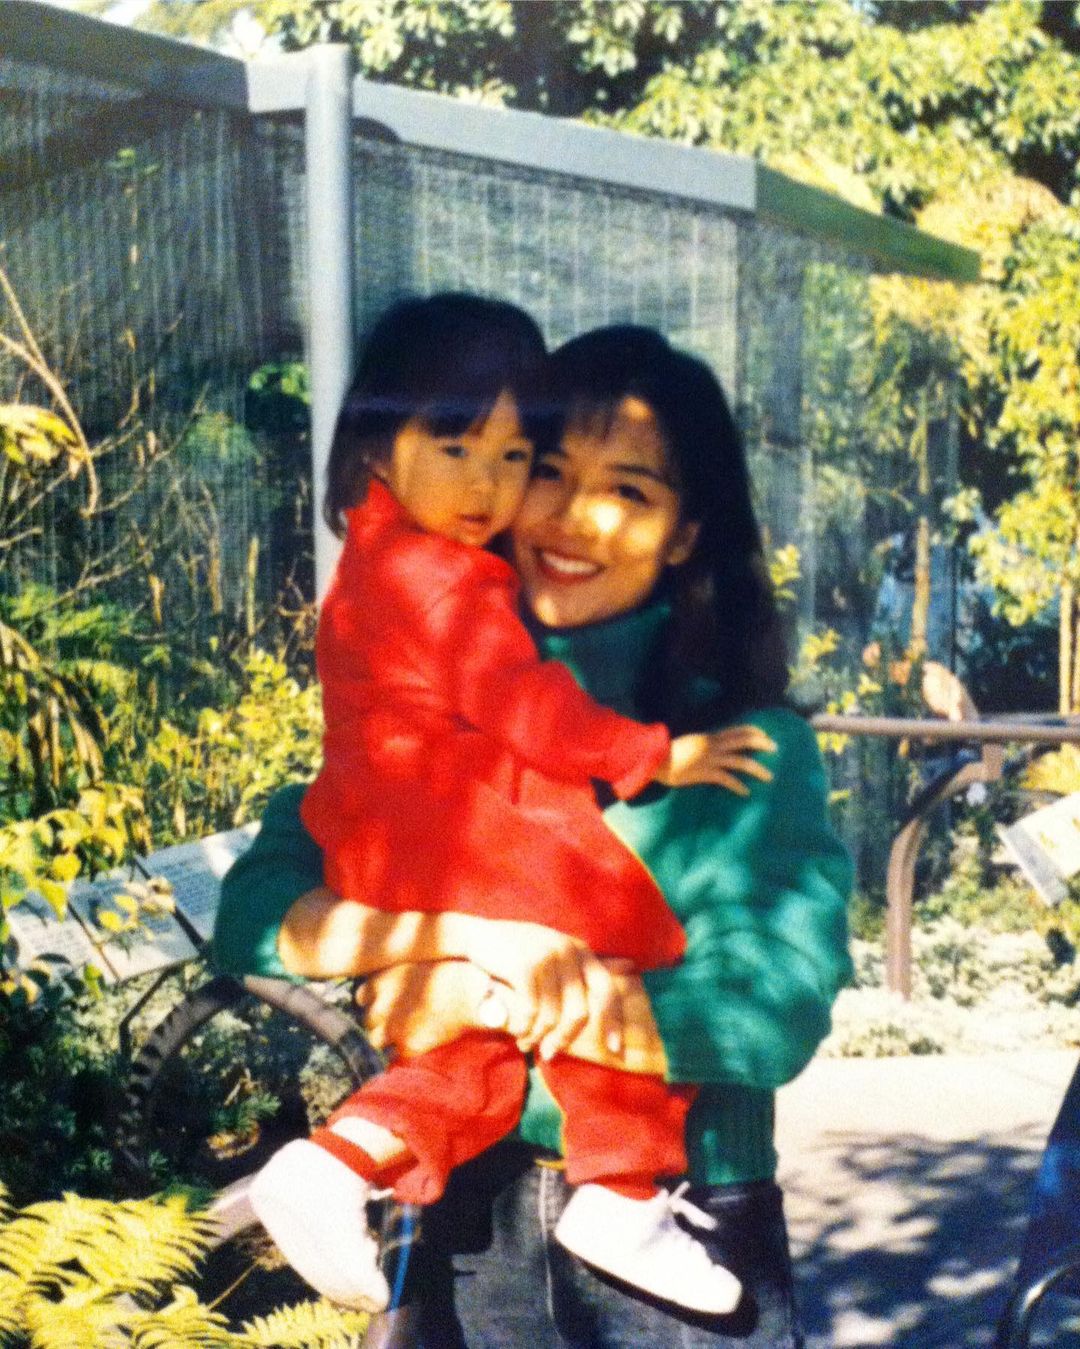 A childhood photo of Ashley Park